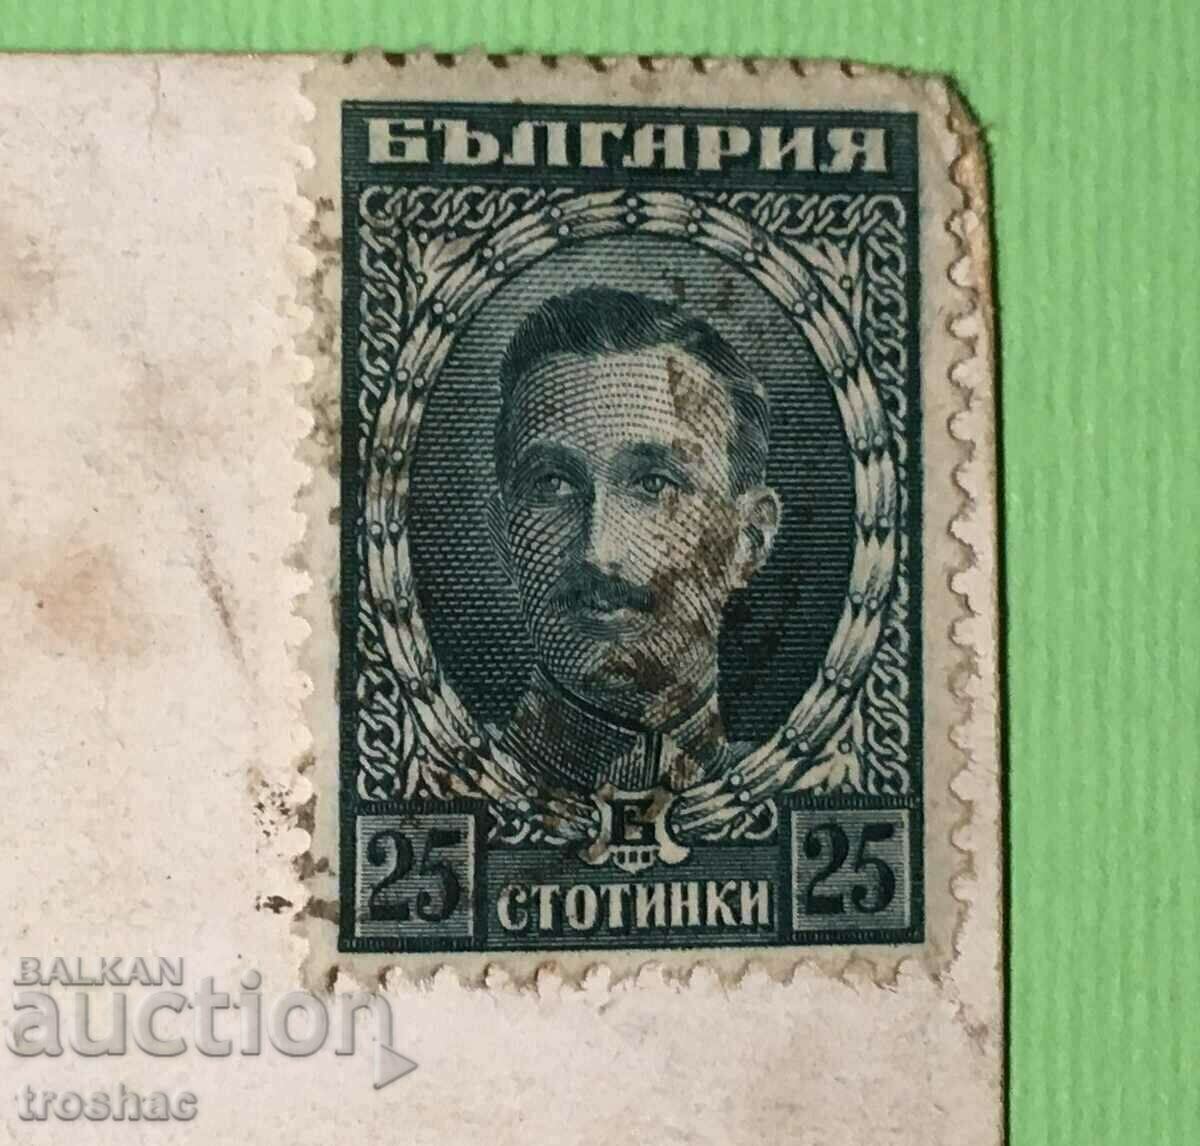 Old Postage Stamp